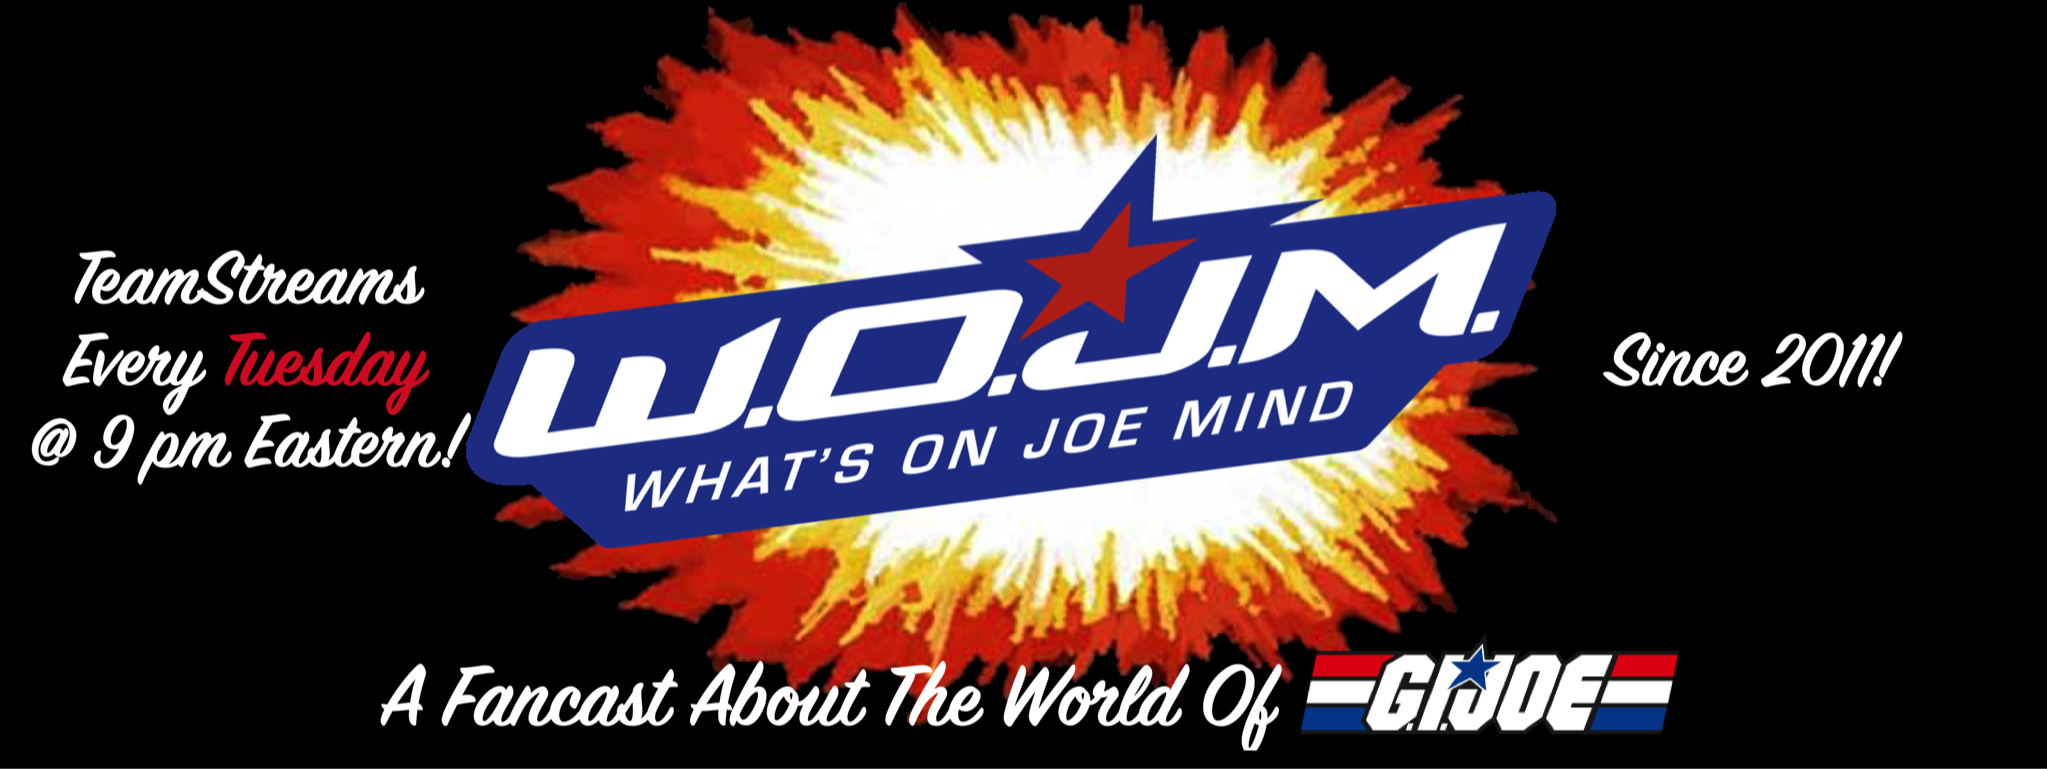 WOJM: What’s On Joe Mind?